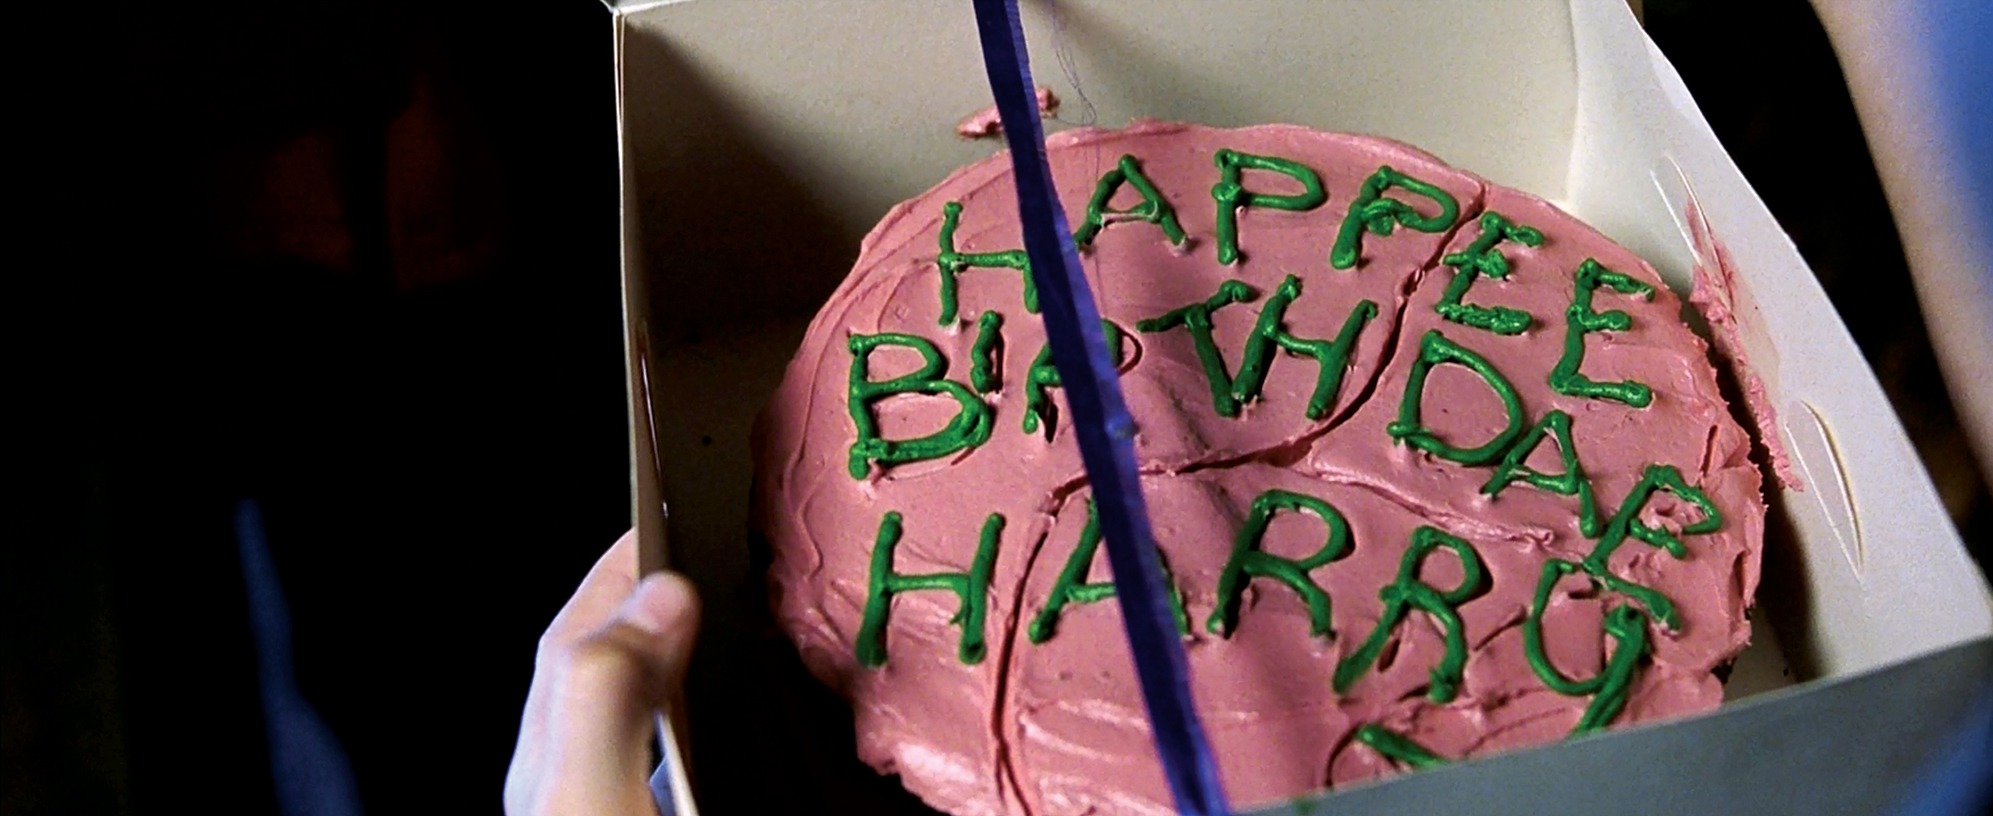 Ranked: Harry Potter's birthday presents